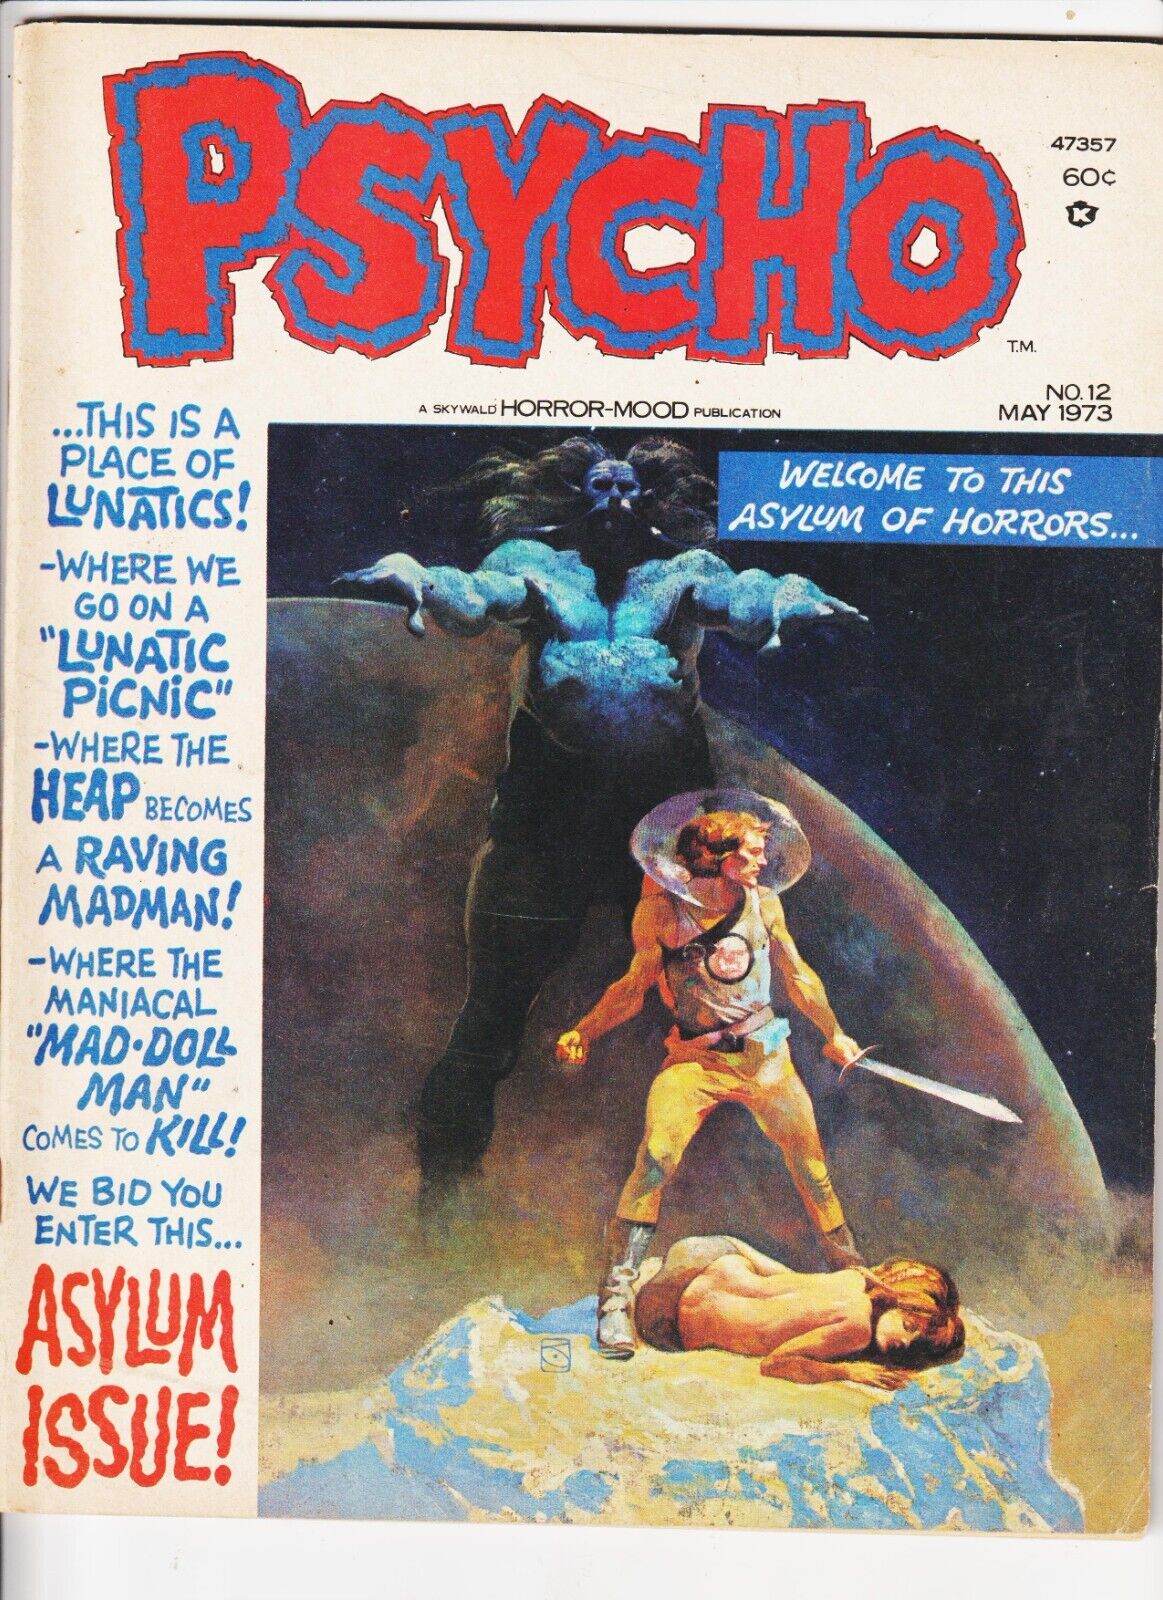 PSYCHO #12  SKYWALD HORROR MONSTER comic magazine   1973 WWII STORY JEFF JONES